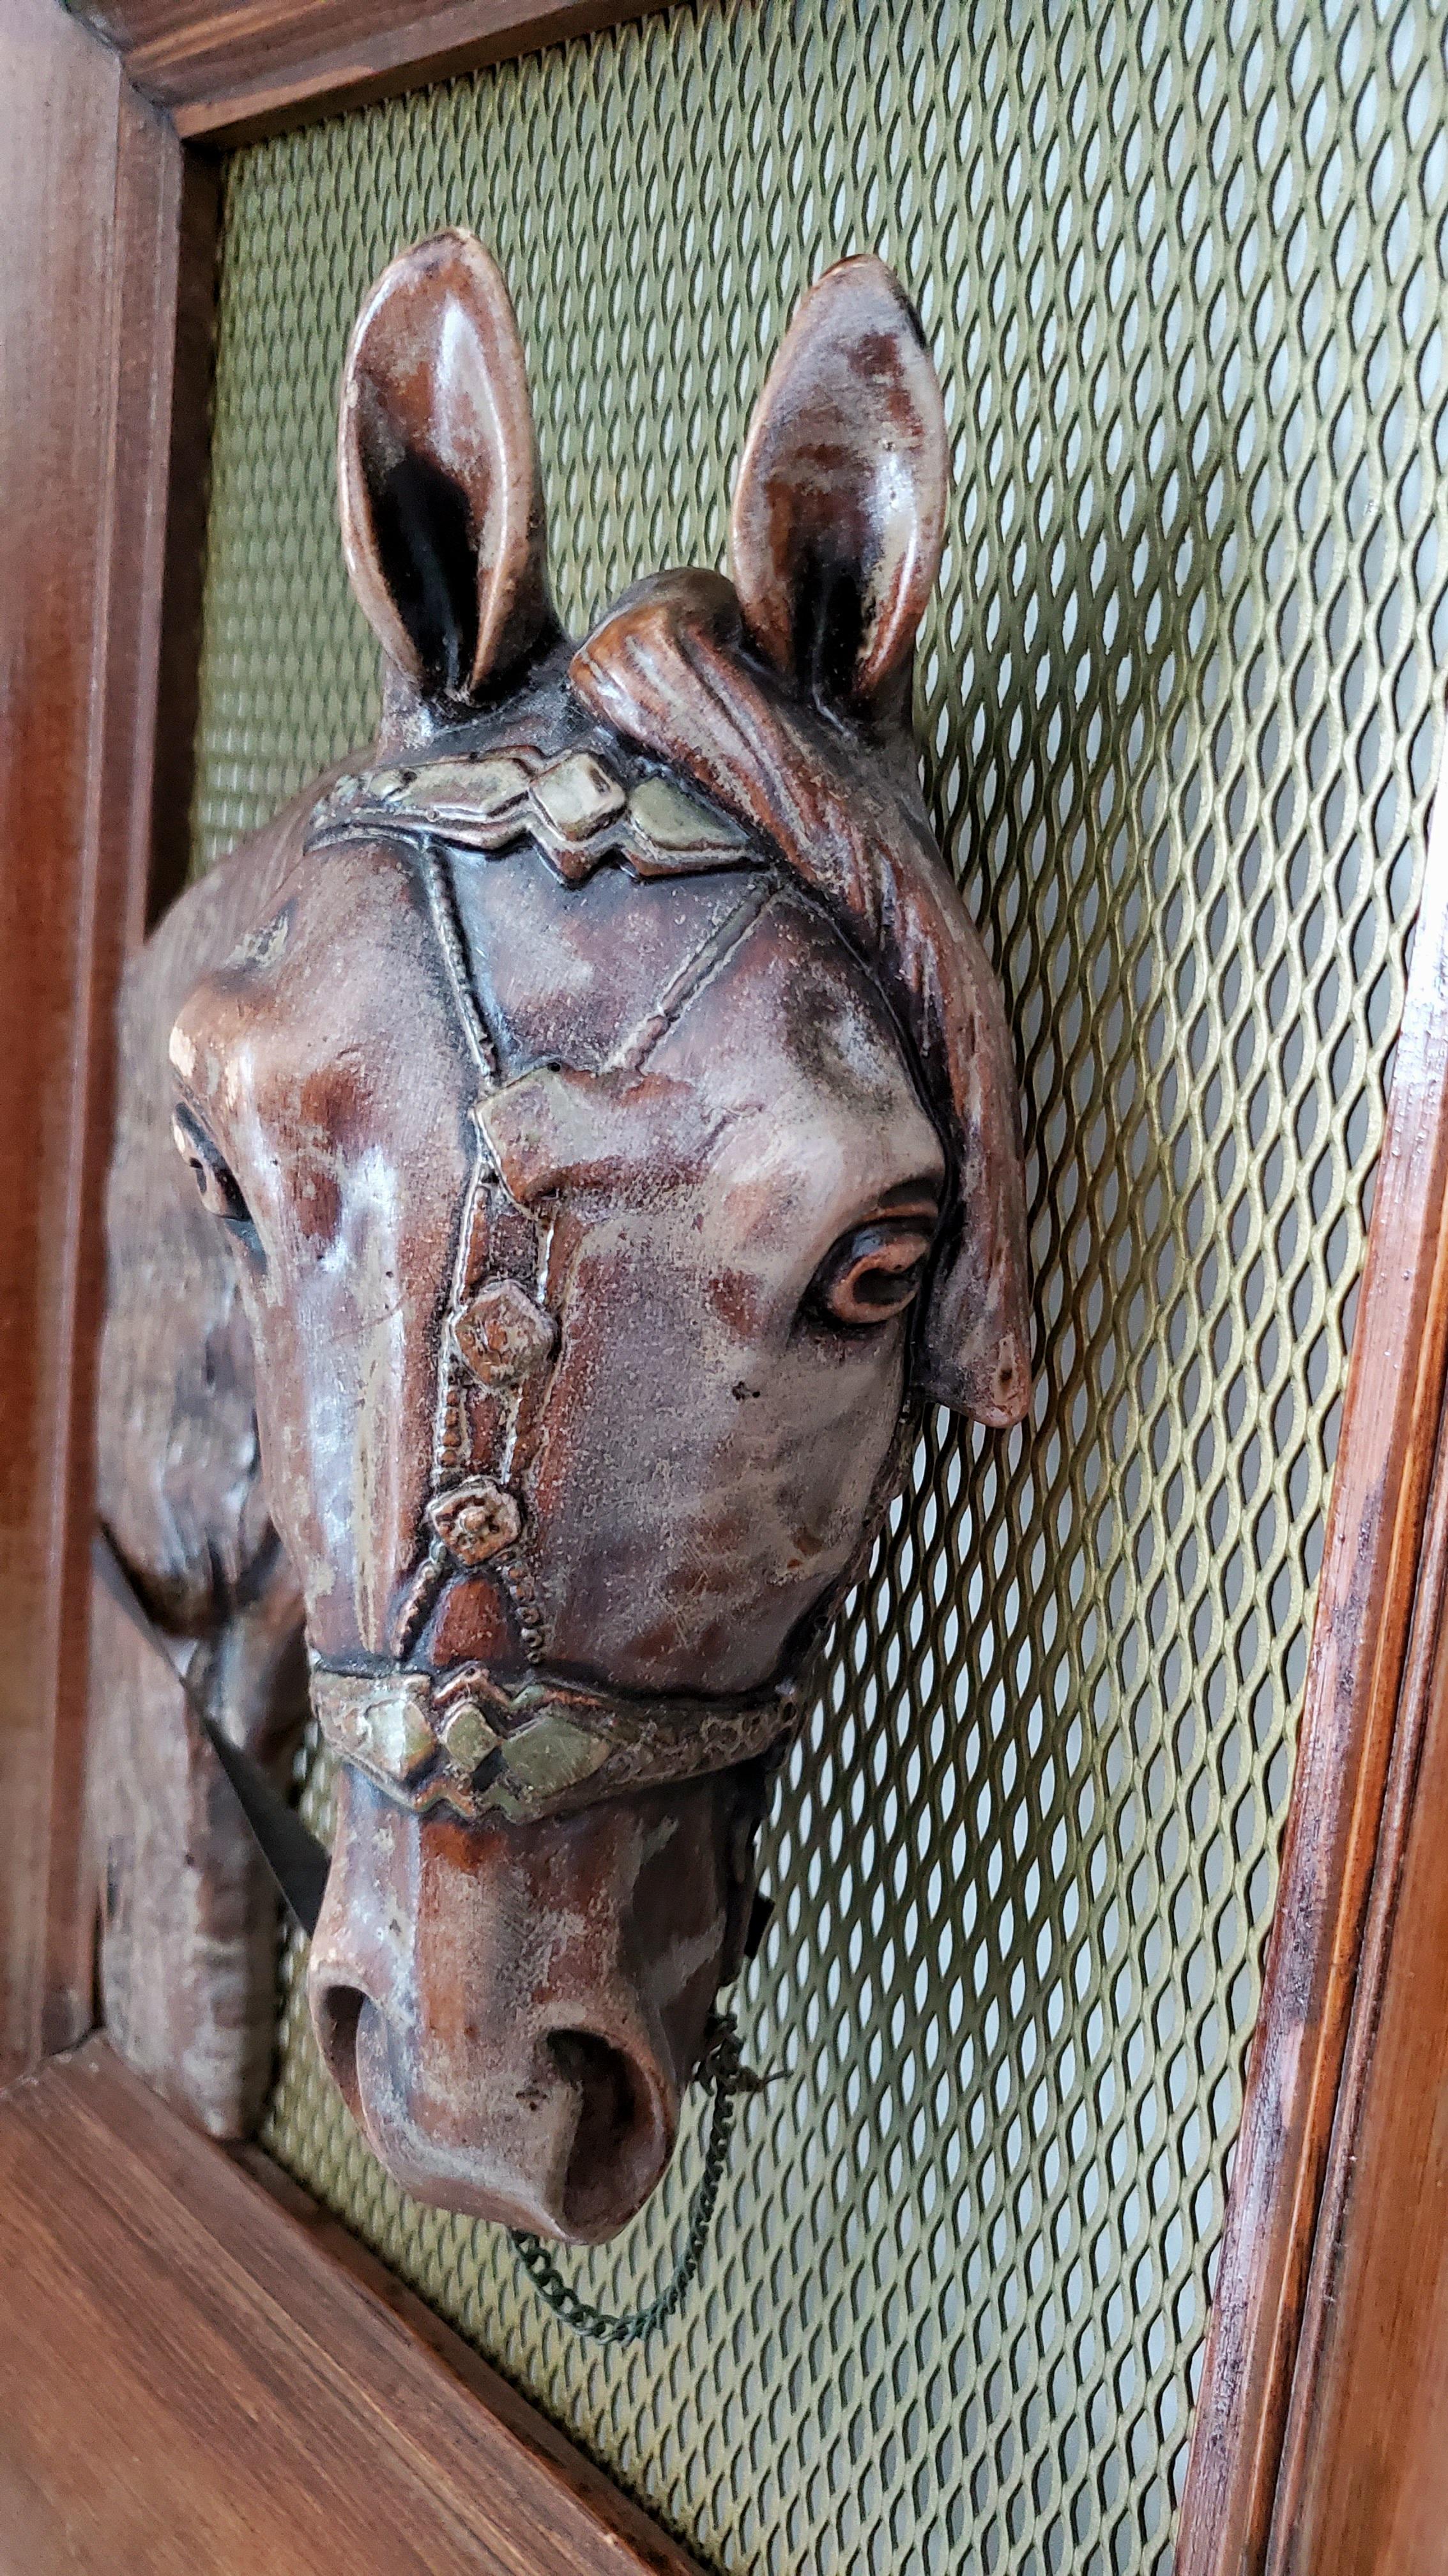 American Craftsman Antique Horse Sculpture  Framed Copper Horse Head in Relief